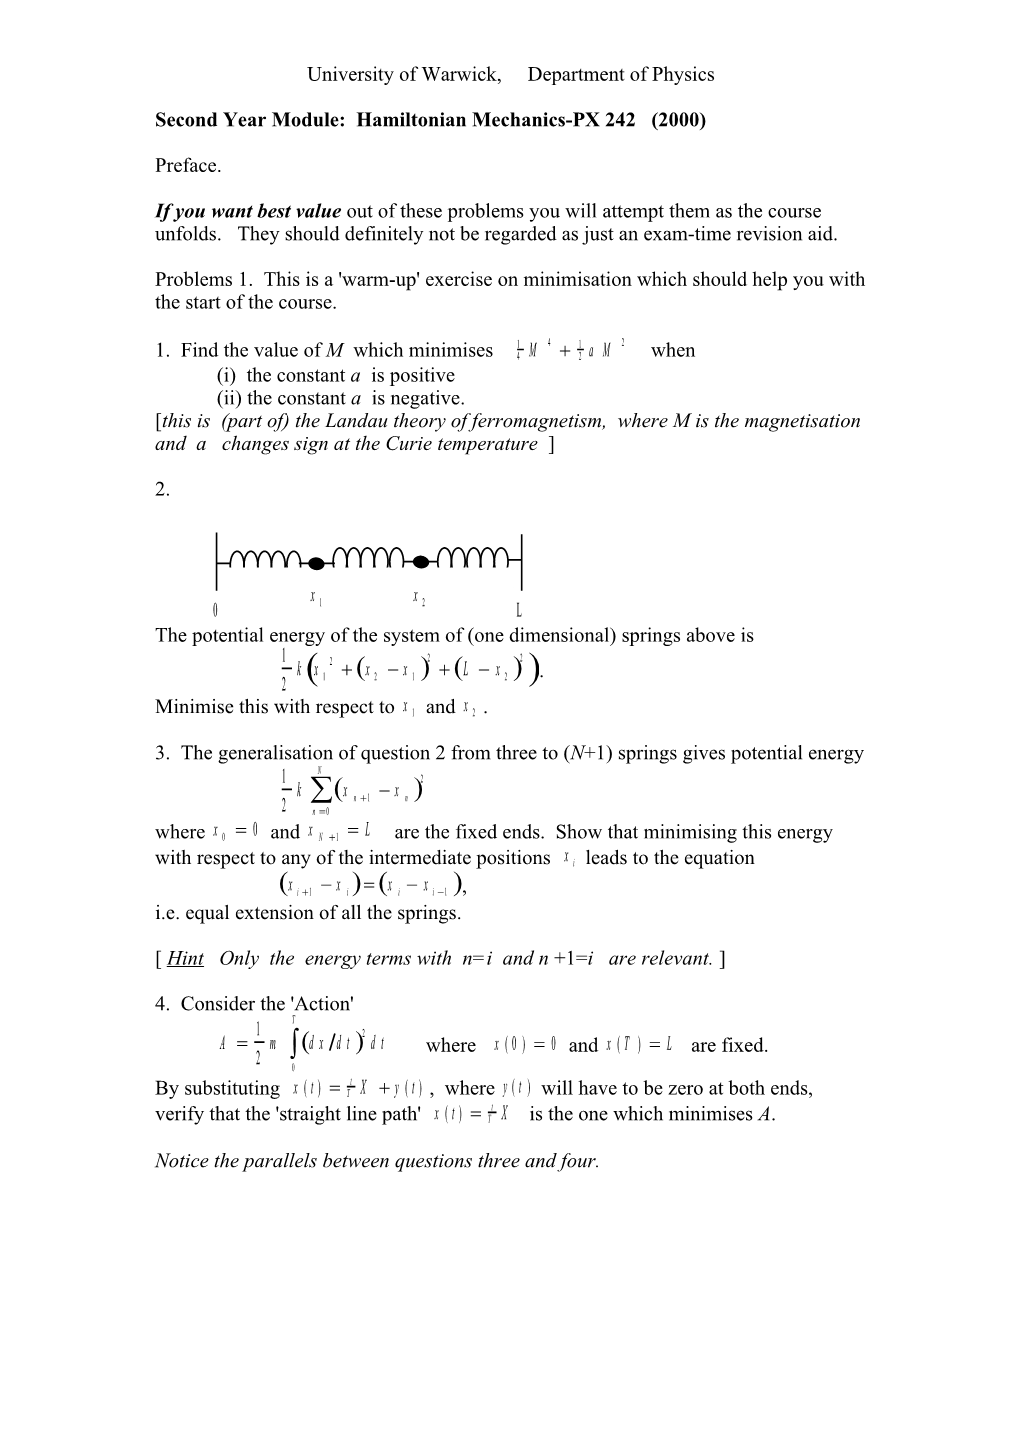 Second Year Module: Hamiltonian Mechanics-PX 242 (2000)